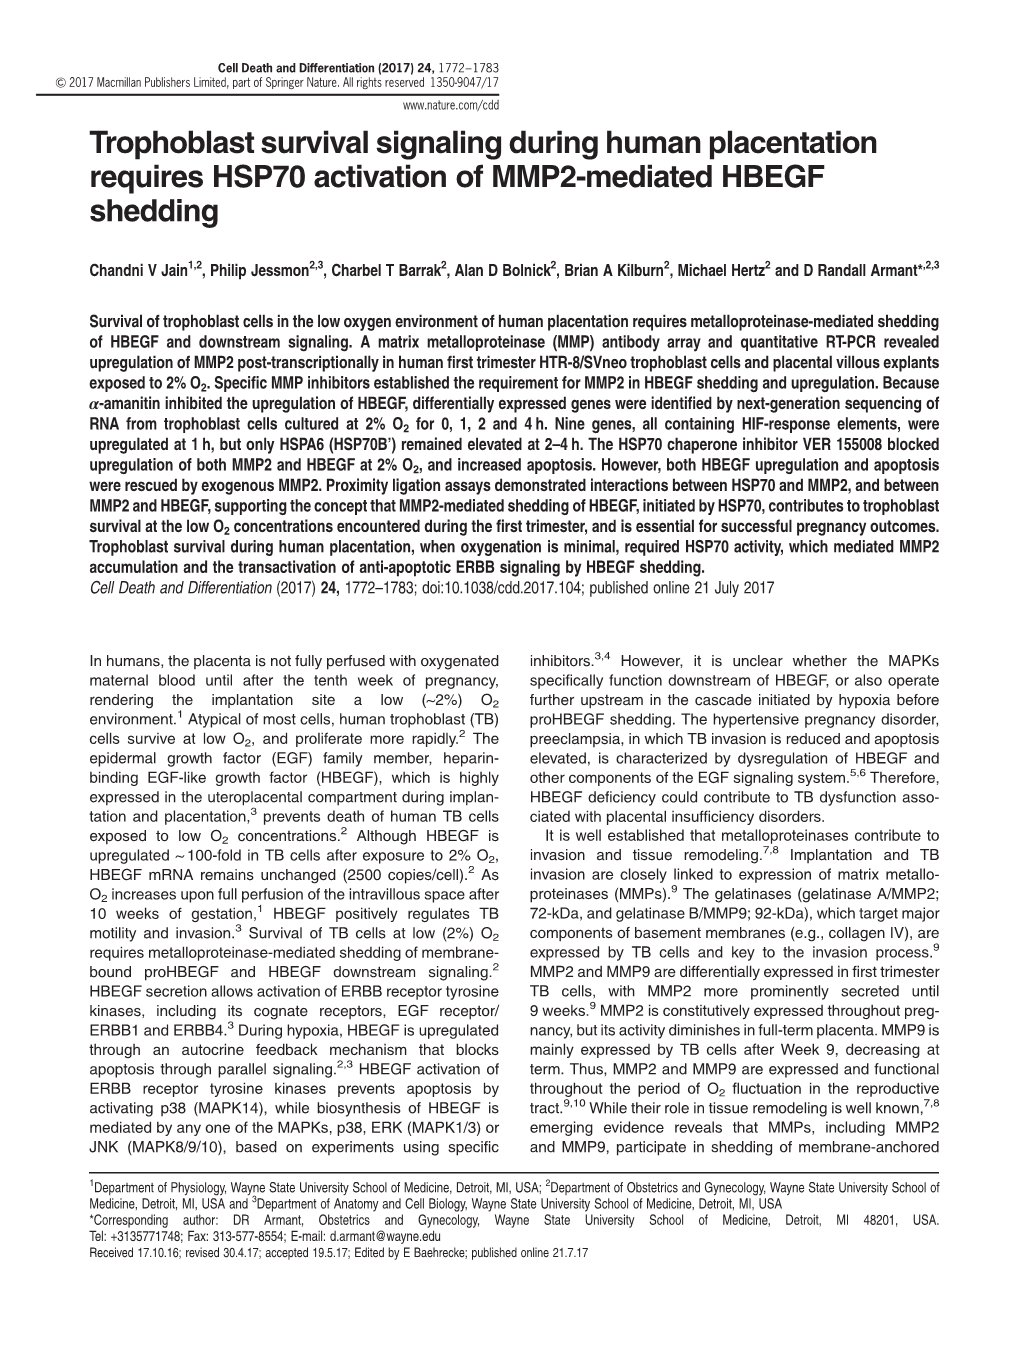 Trophoblast Survival Signaling During Human Placentation Requires HSP70 Activation of MMP2-Mediated HBEGF Shedding